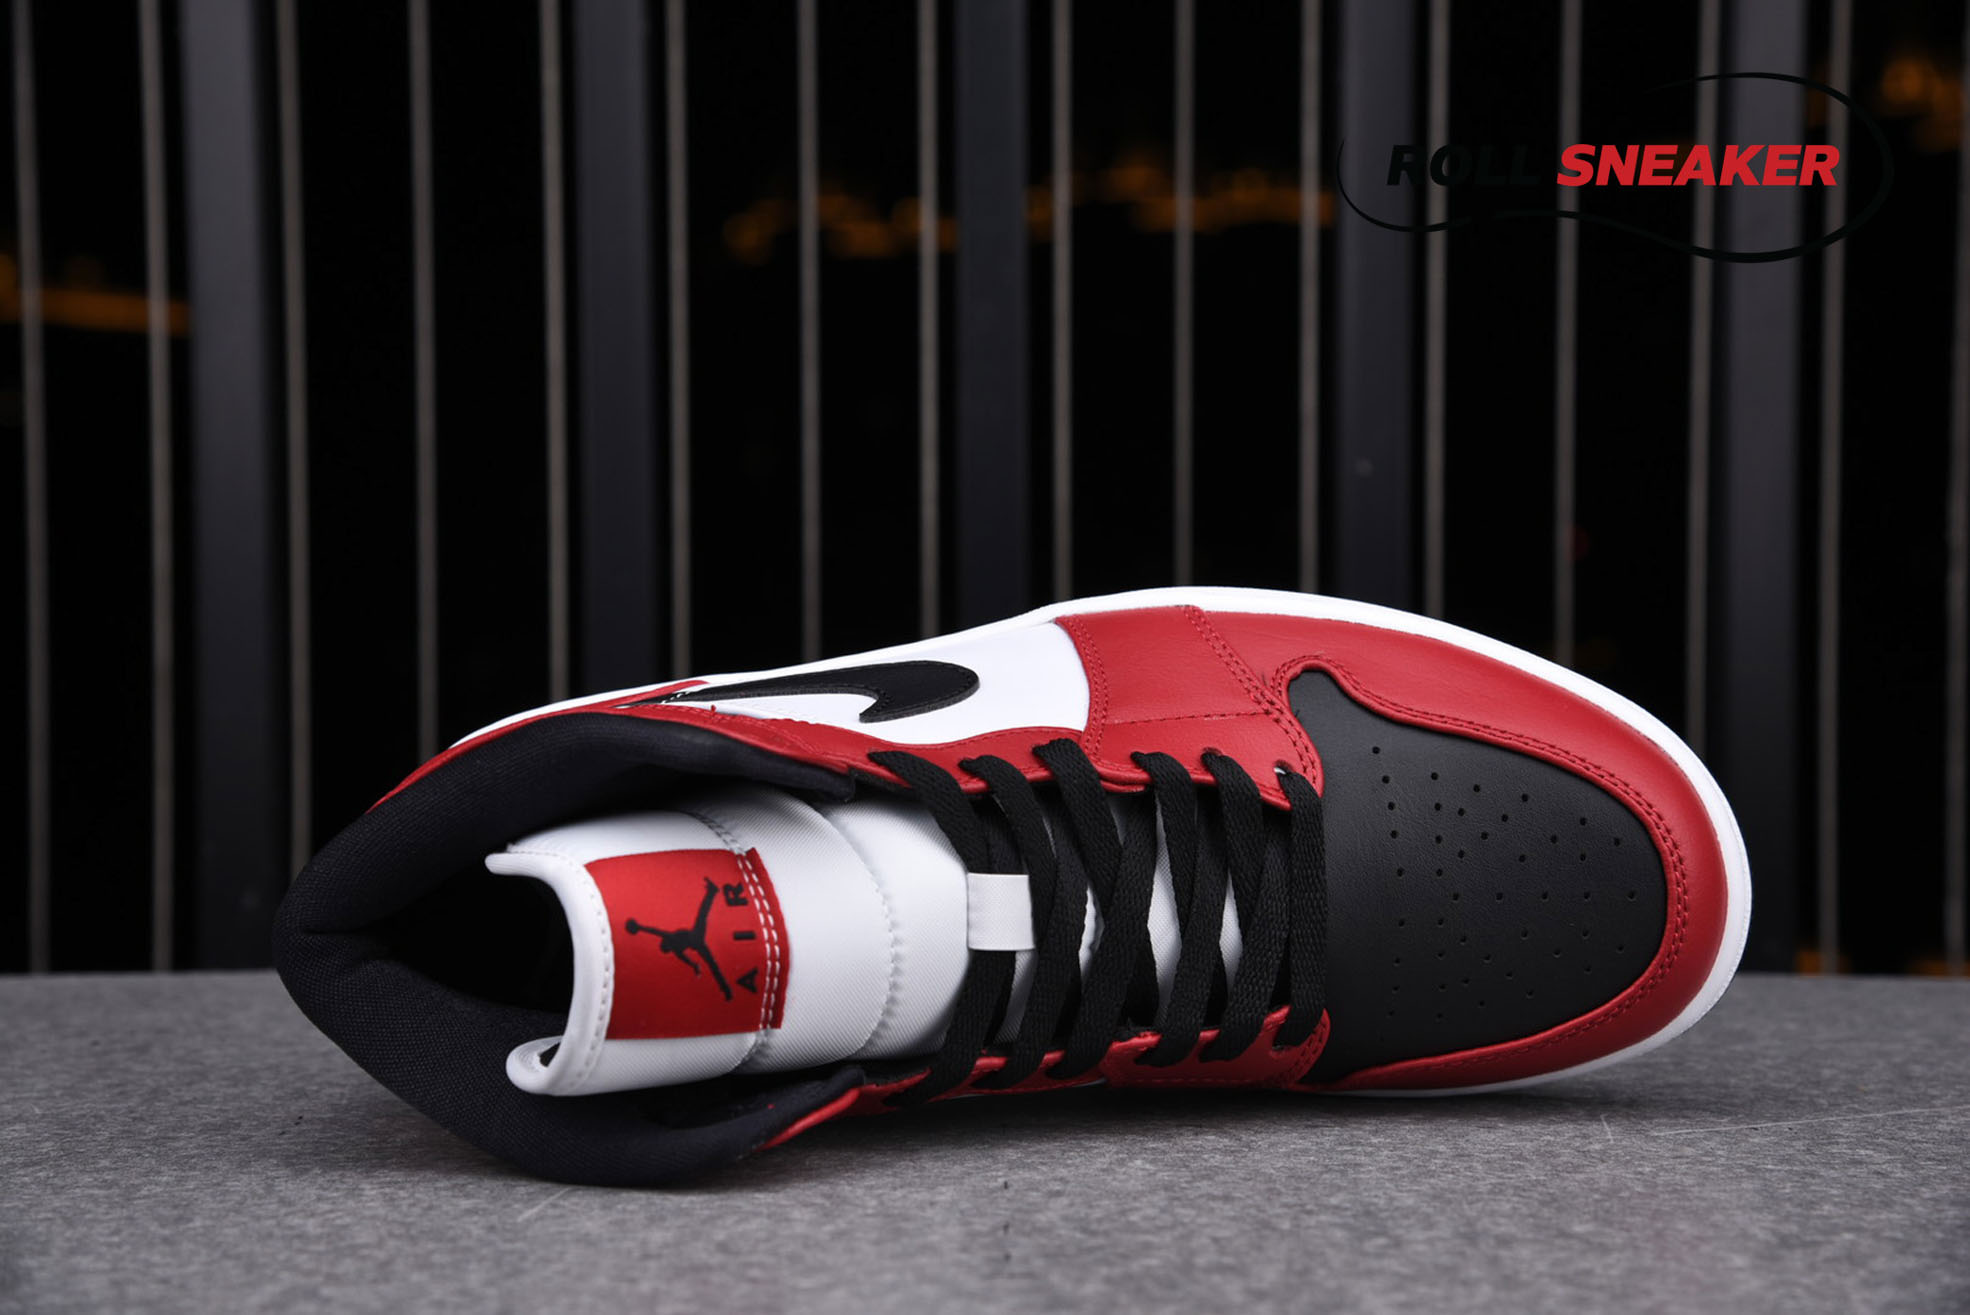 Nike Air Jordan 1 Mid Chicago Black Toe
